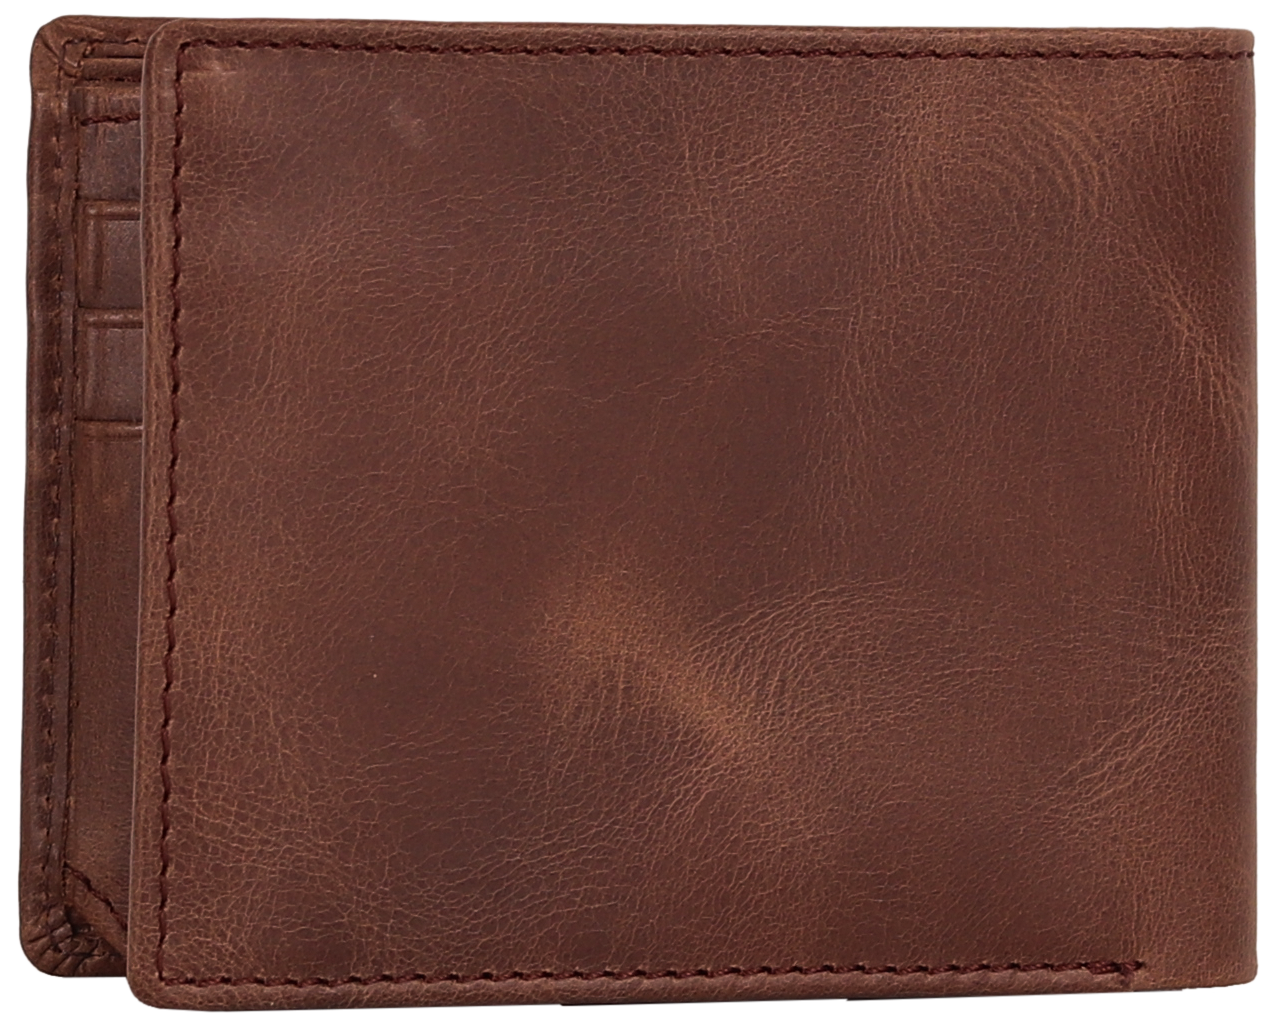 Men's 8 Card Slot Leather Wallet